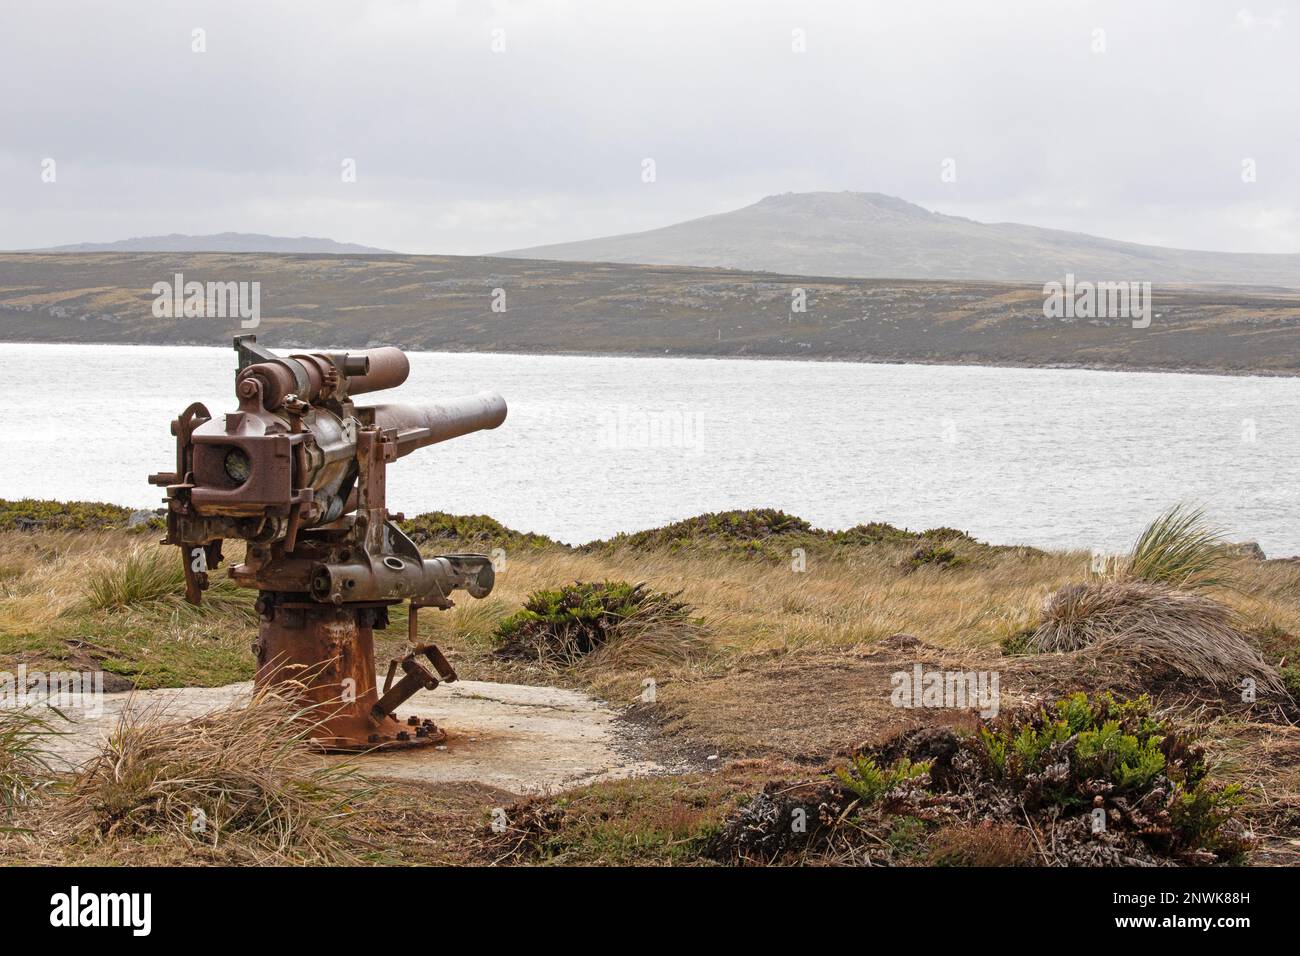 A British Field Gun from the First World War, near Gypsy Cove, on the Falkland Islands. Stock Photo